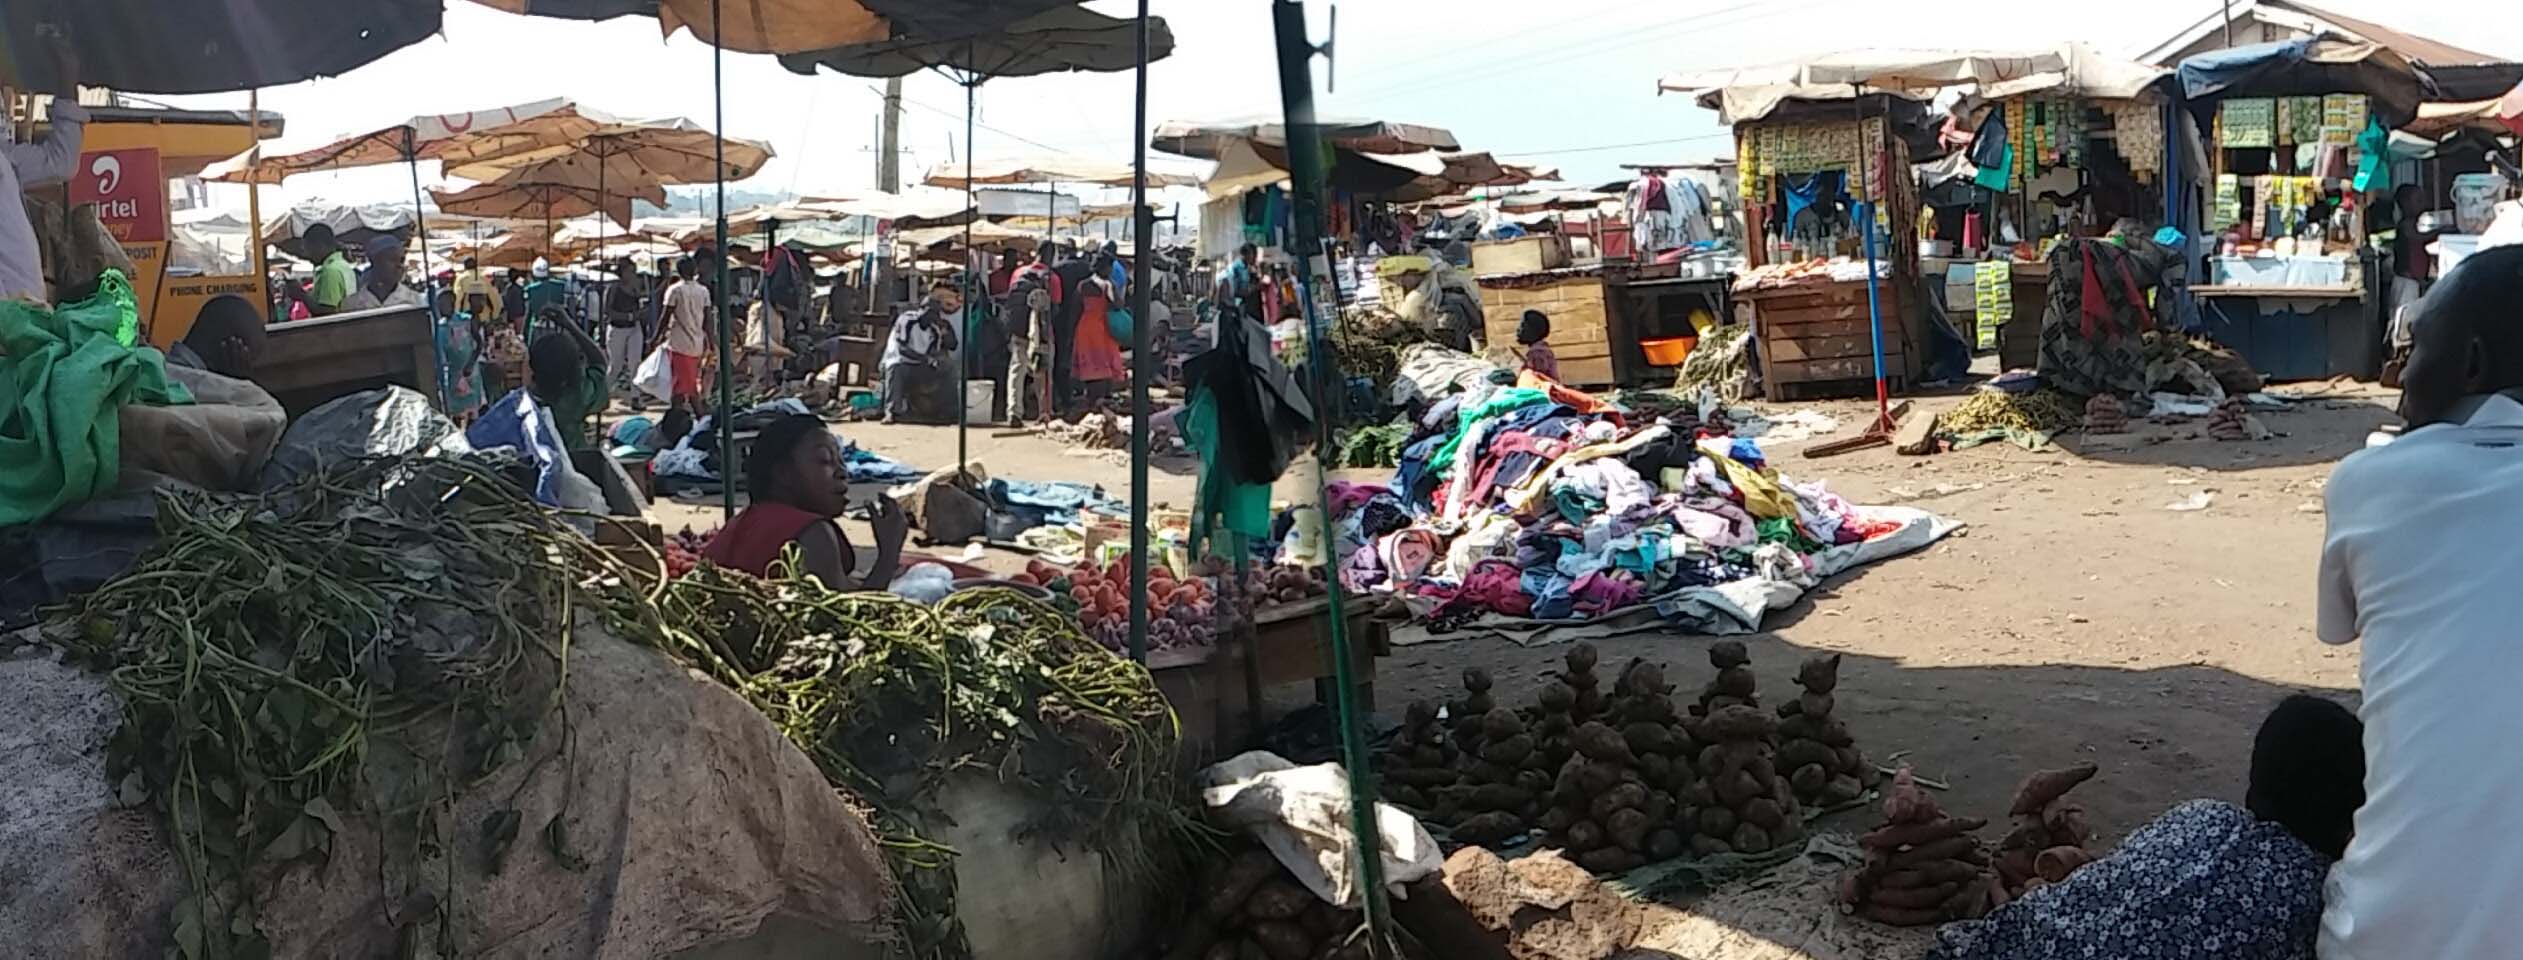 Kalerwe market cover